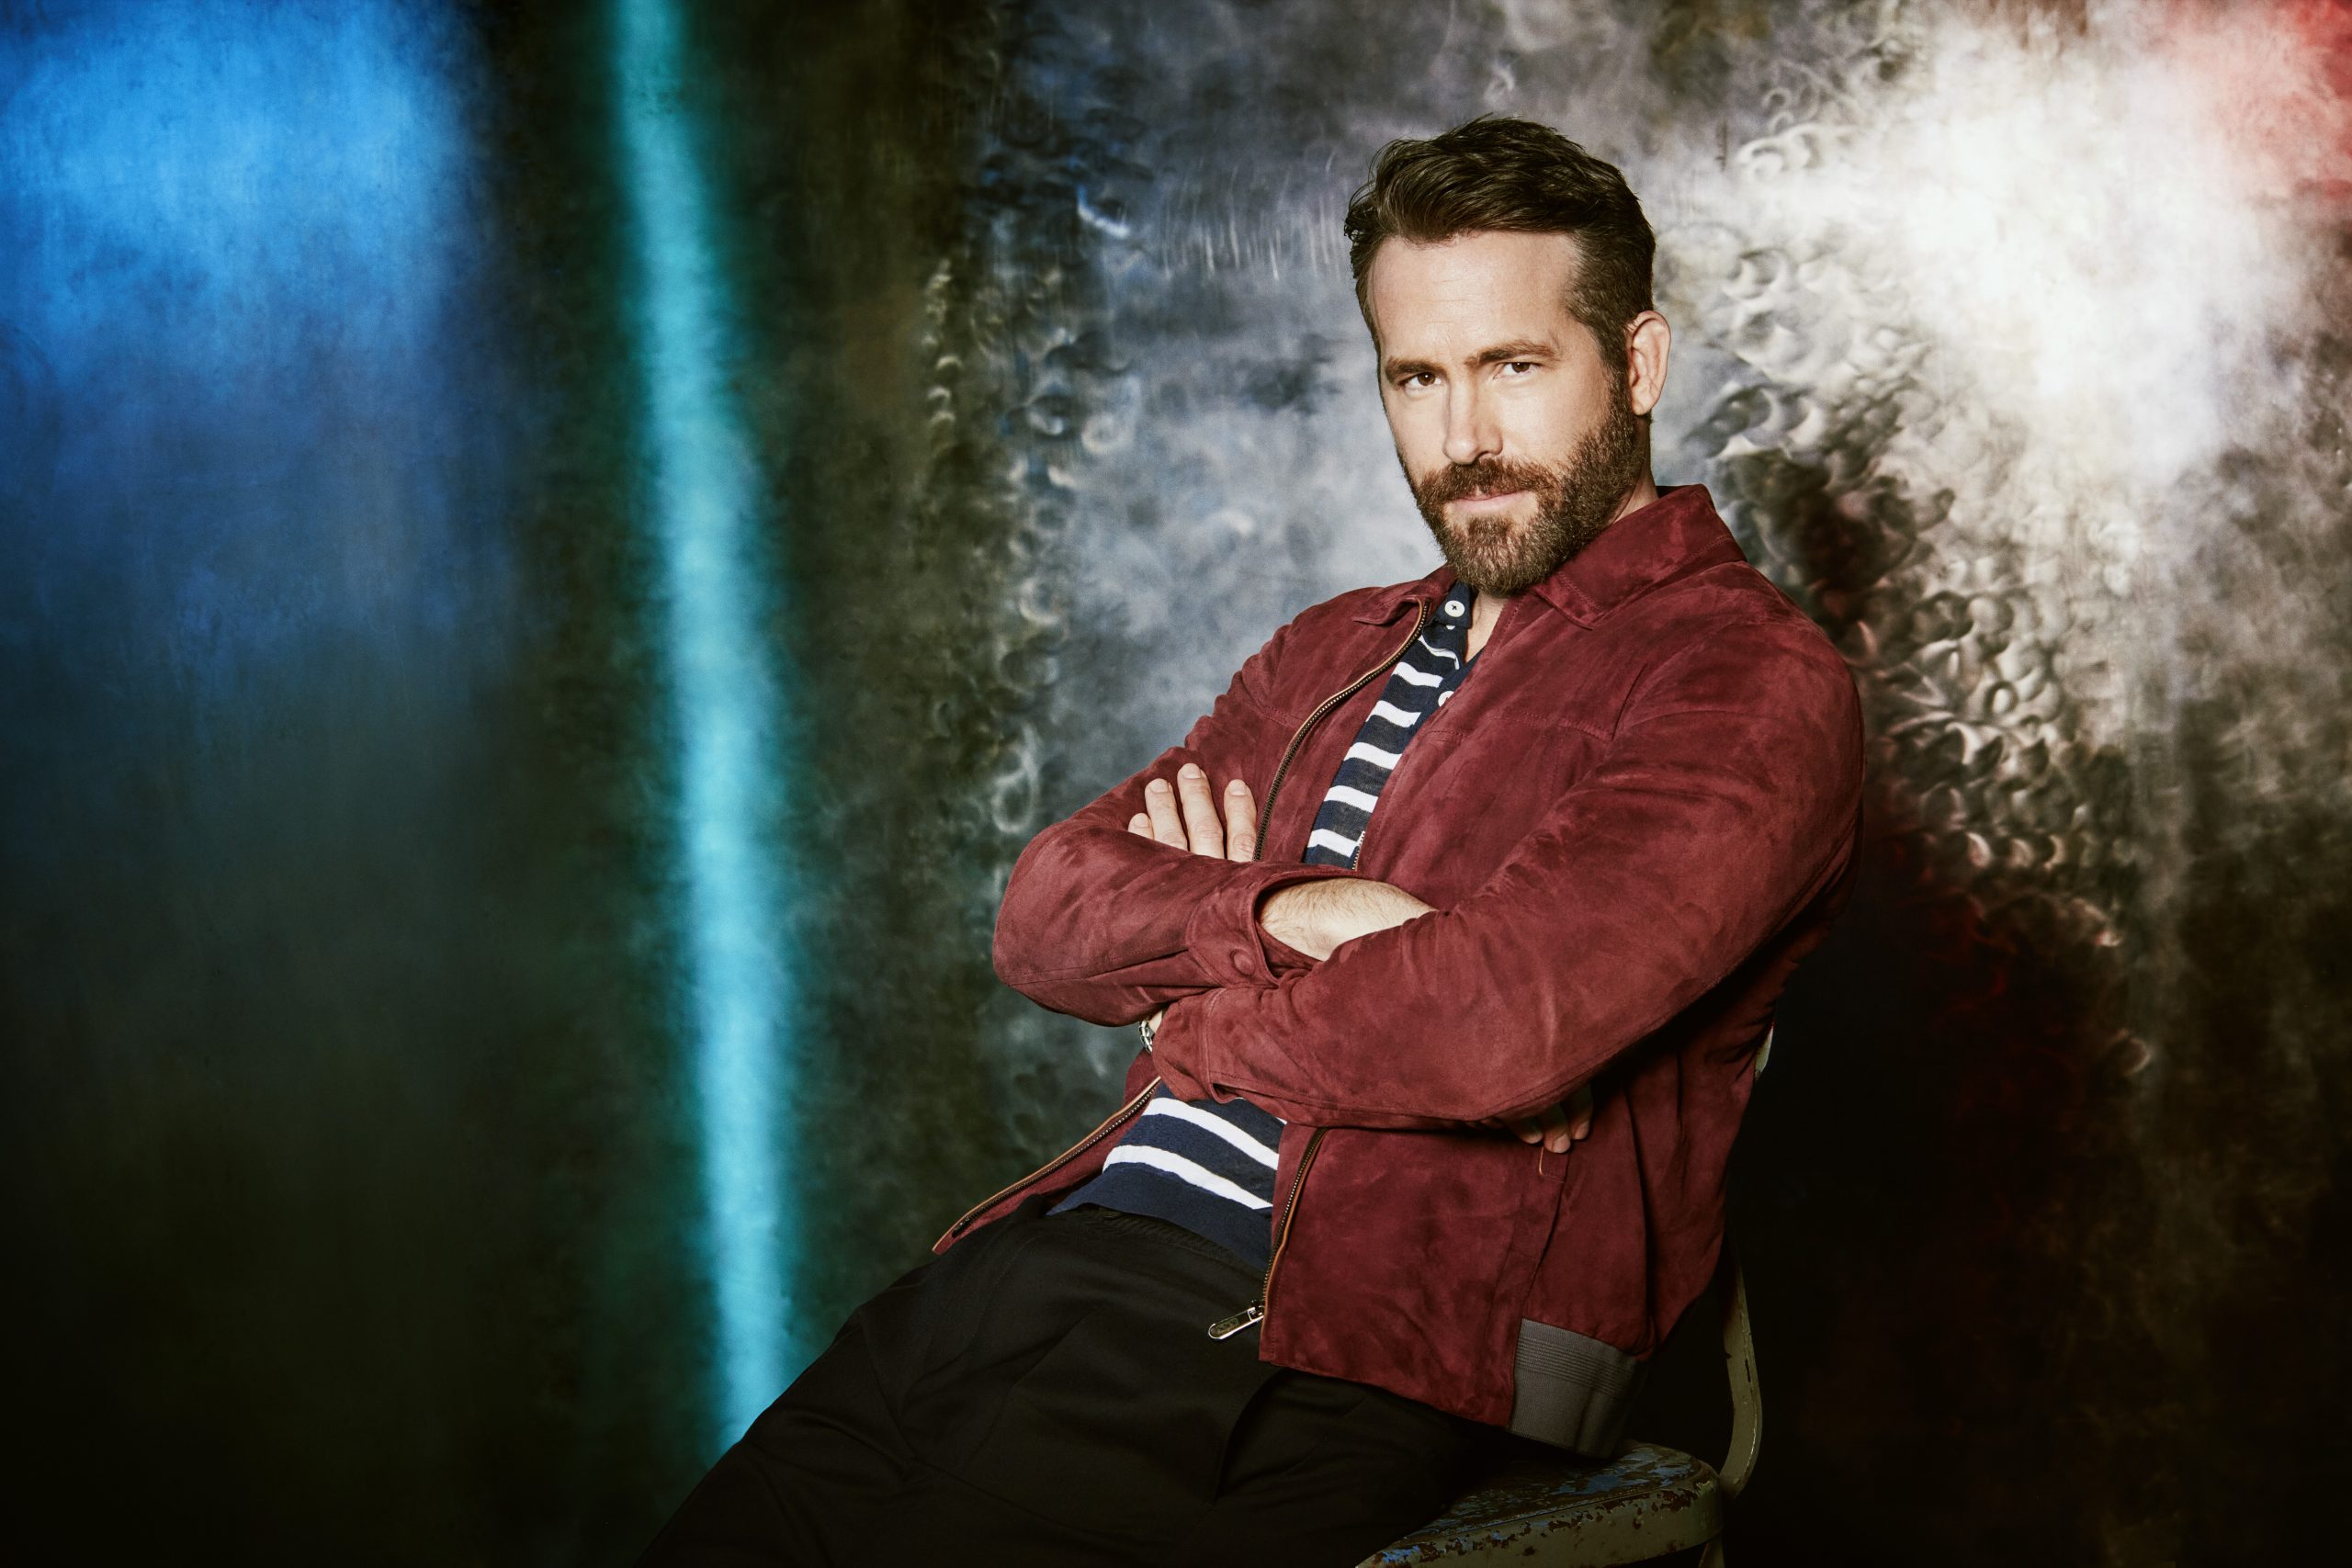 The Adam Project: Ryan Reynolds Meets Himself in Walker Scobell in New Clip